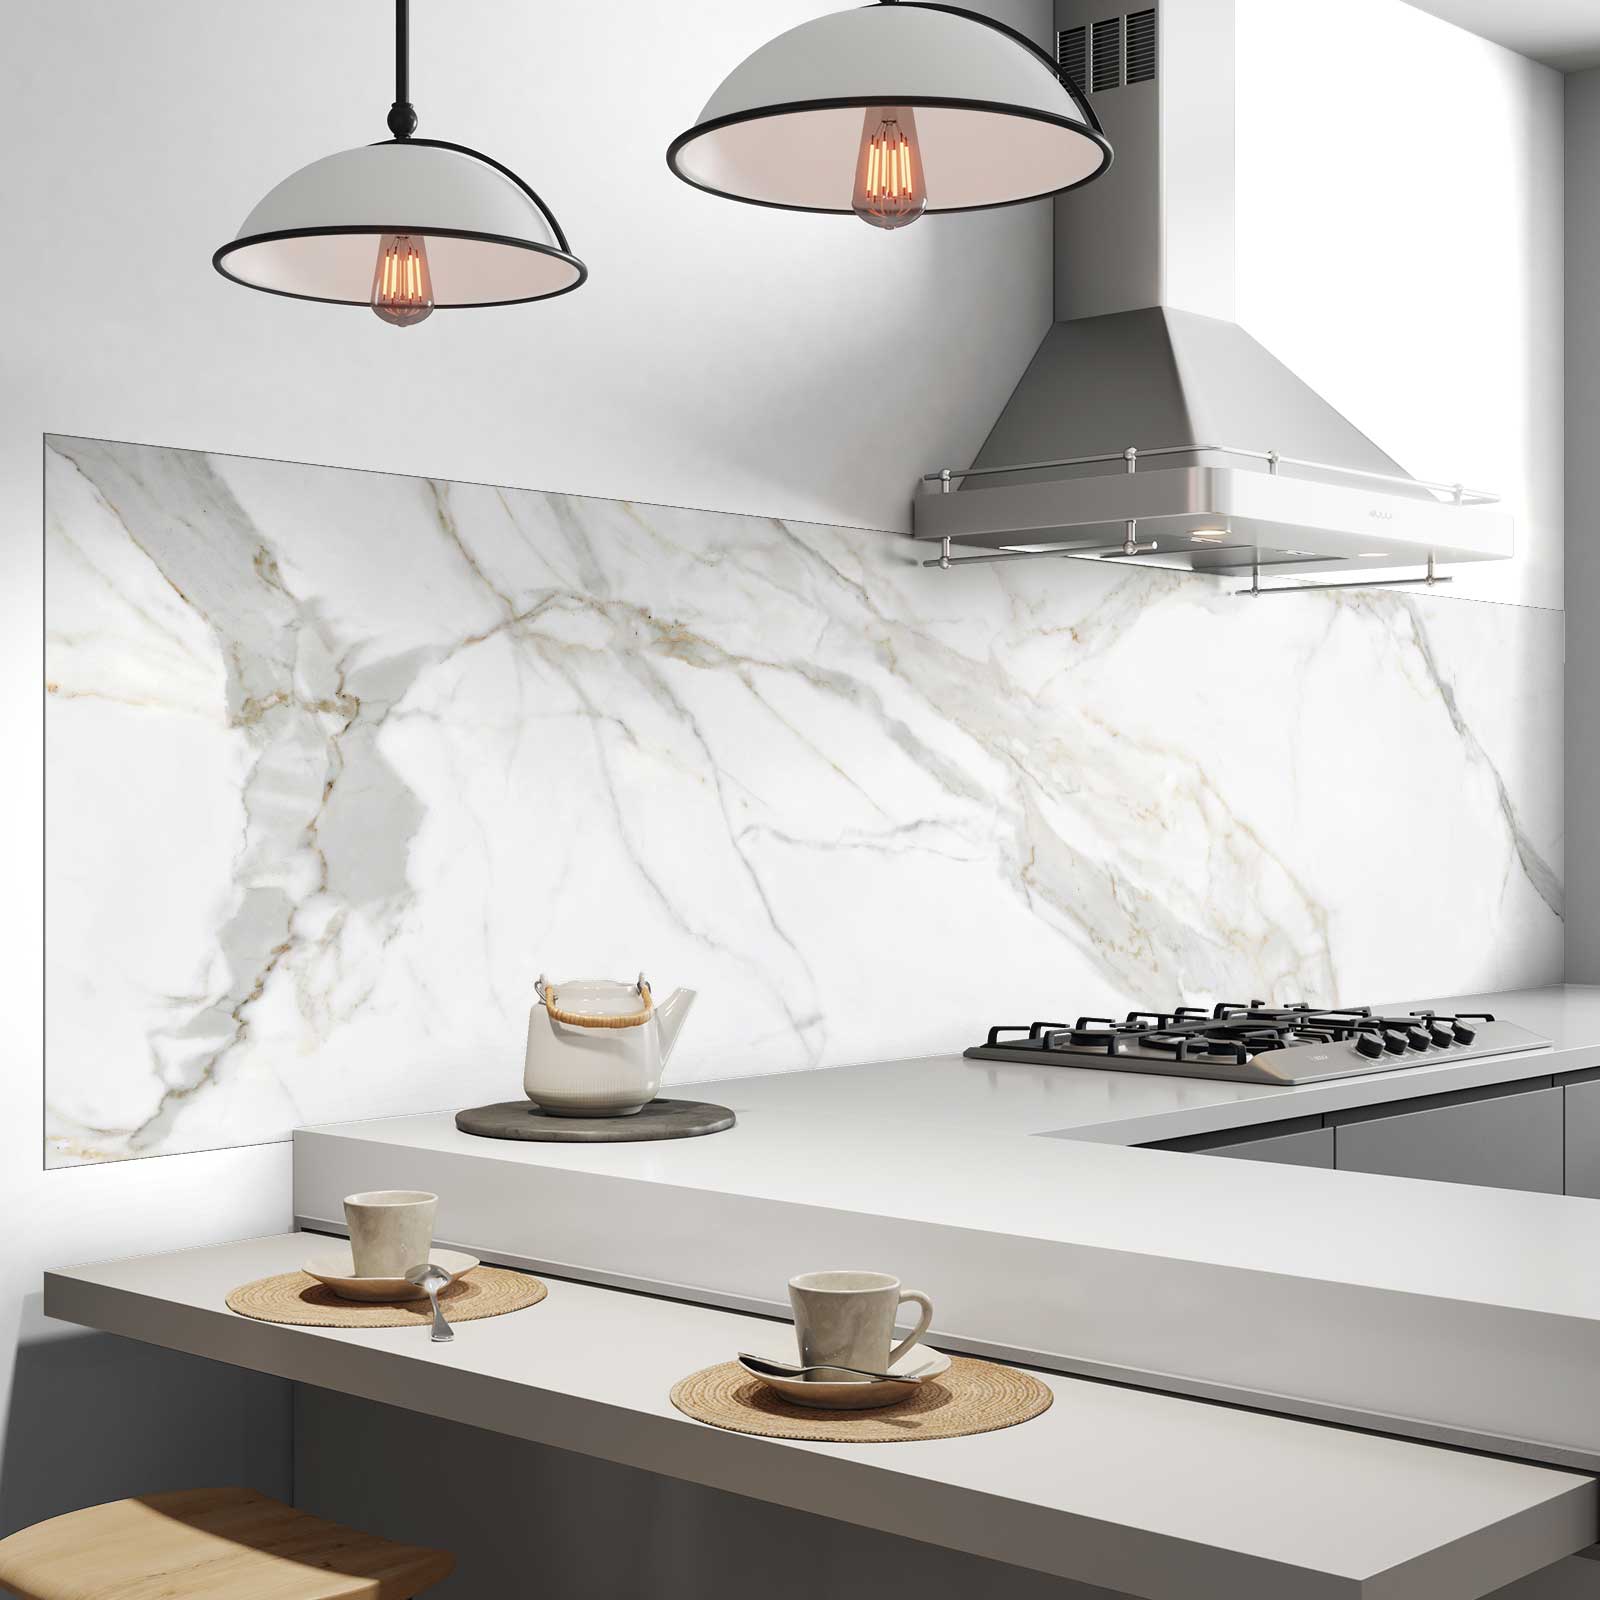 Küchenrückwand Folie - Weiße Marmorstruktur 350 x 60 cm